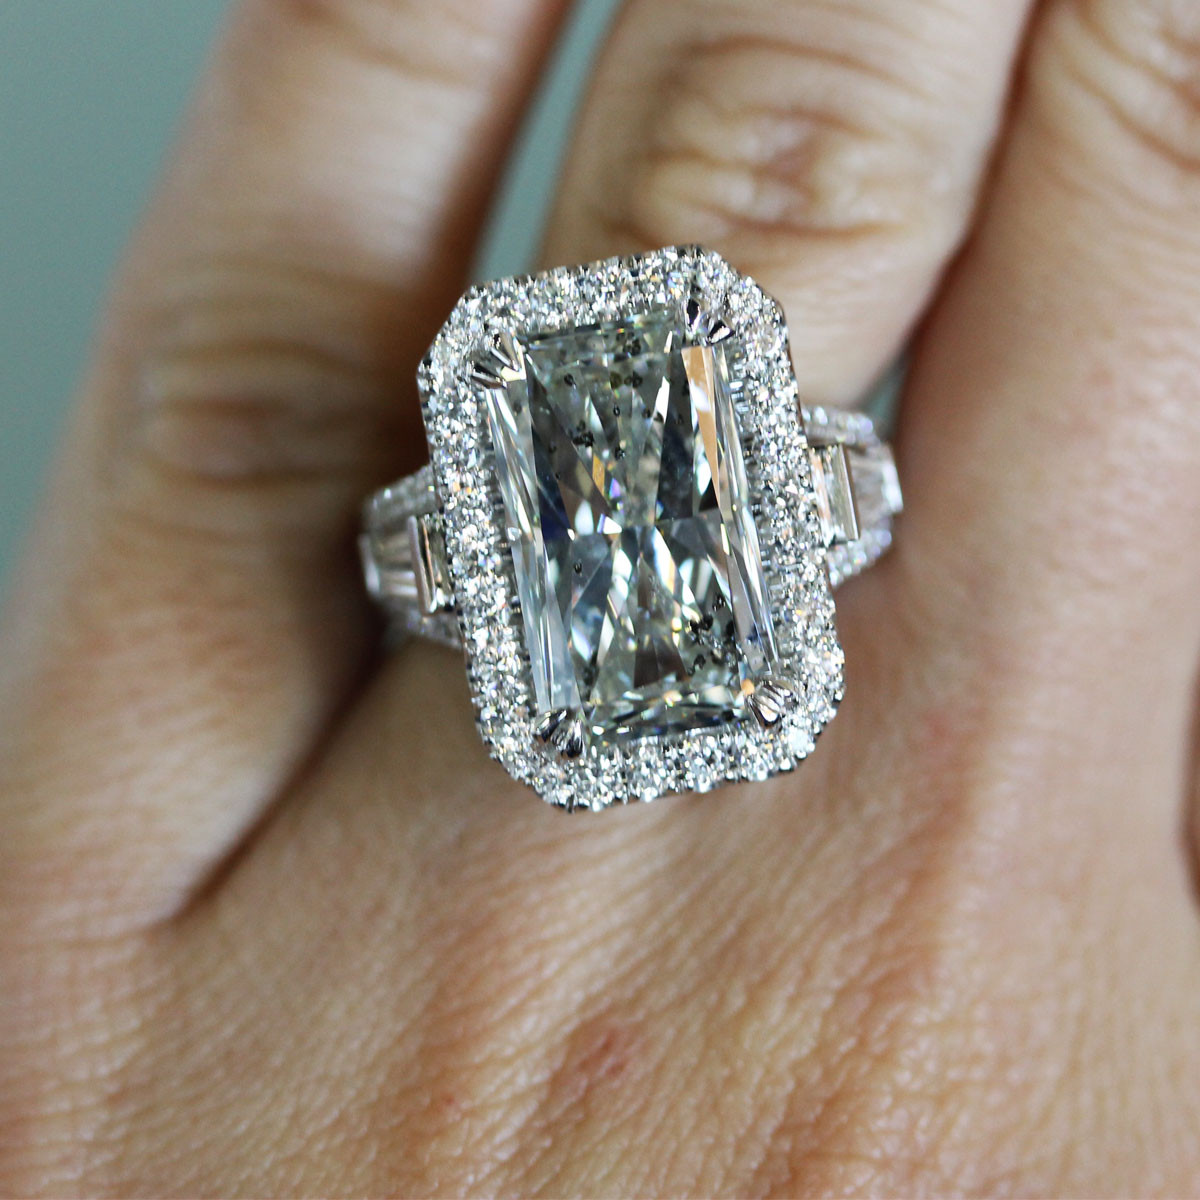 Radiant Cut Diamond Engagement Rings
 EGL Certified 9 03ct Radiant Cut Diamond Engagement Ring